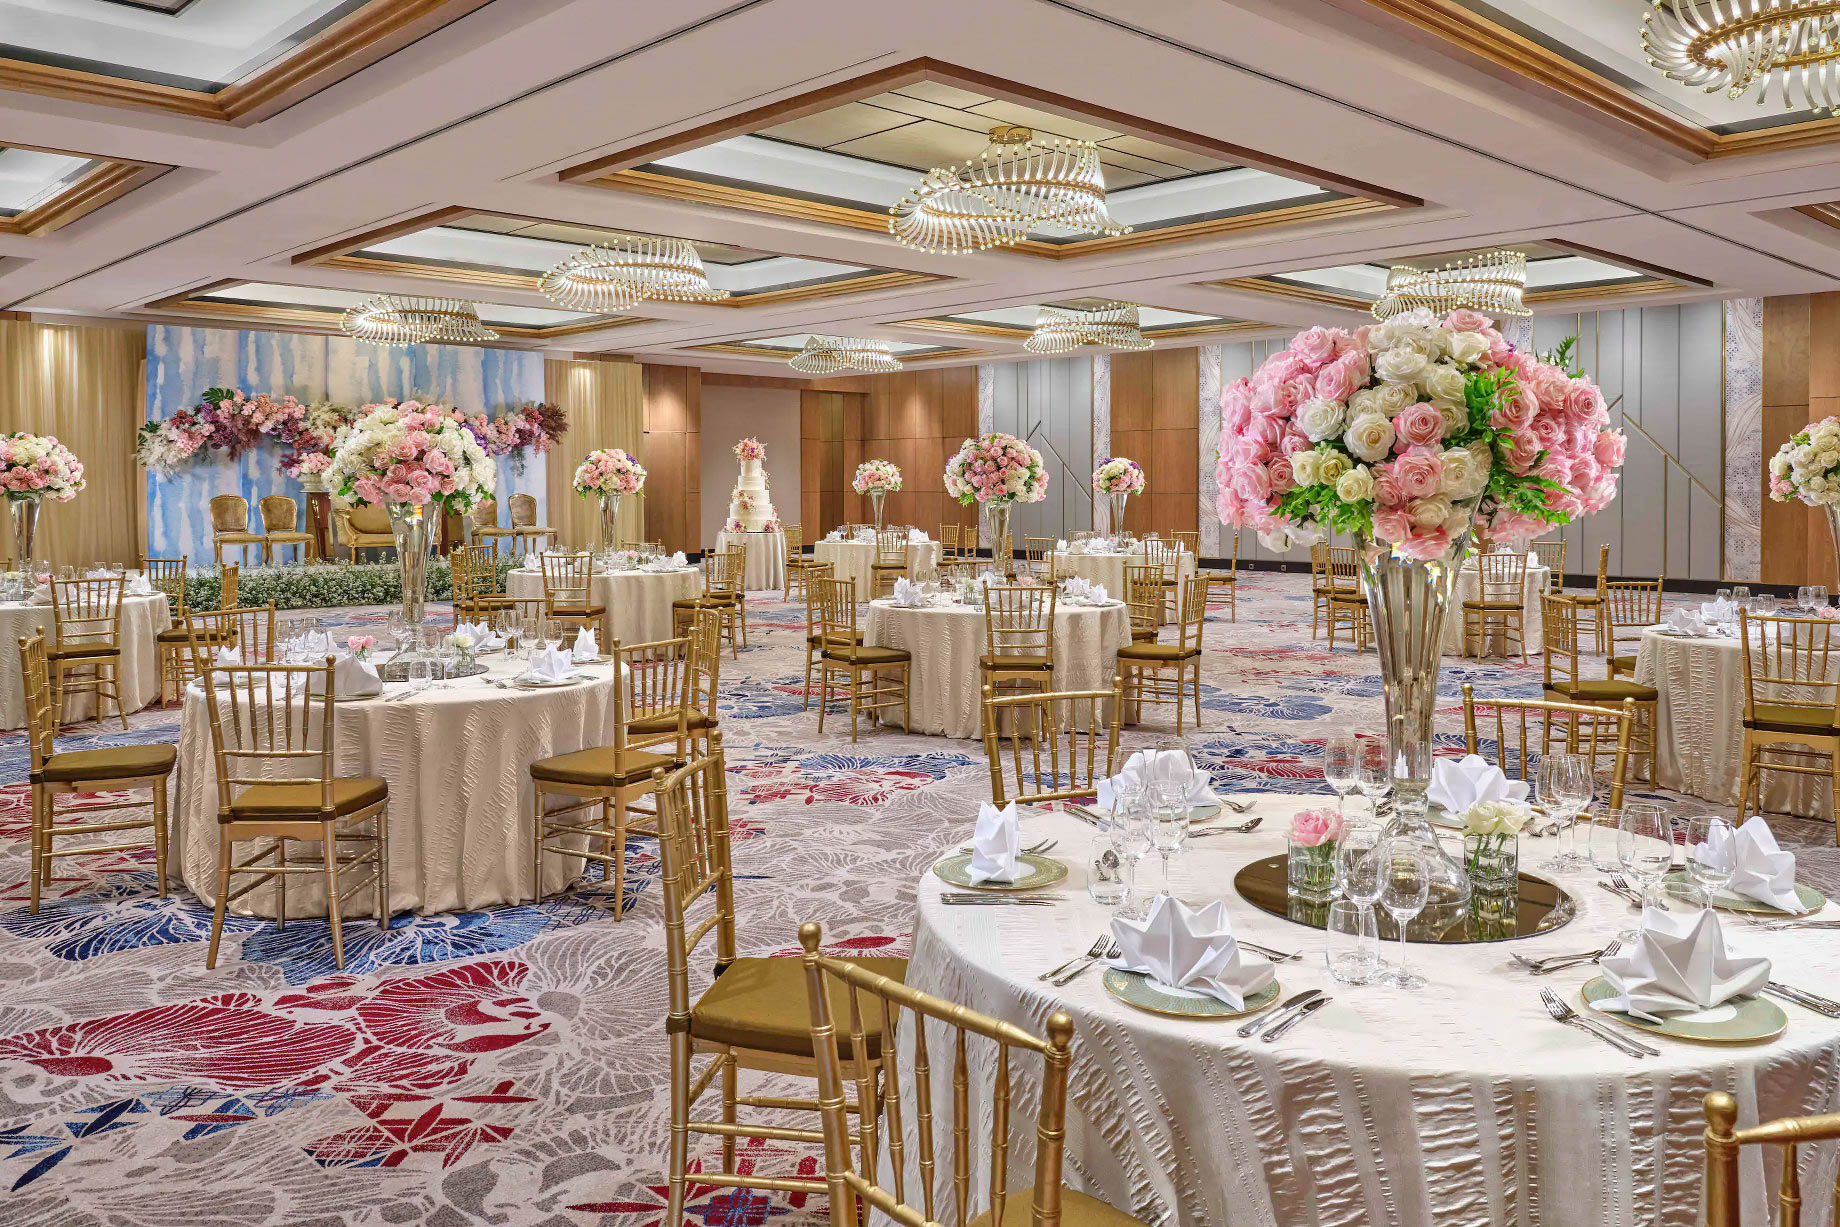 Mandarin Oriental, Jakarta Hotel – Jakarta, Indonesia – Ballroom Wedding